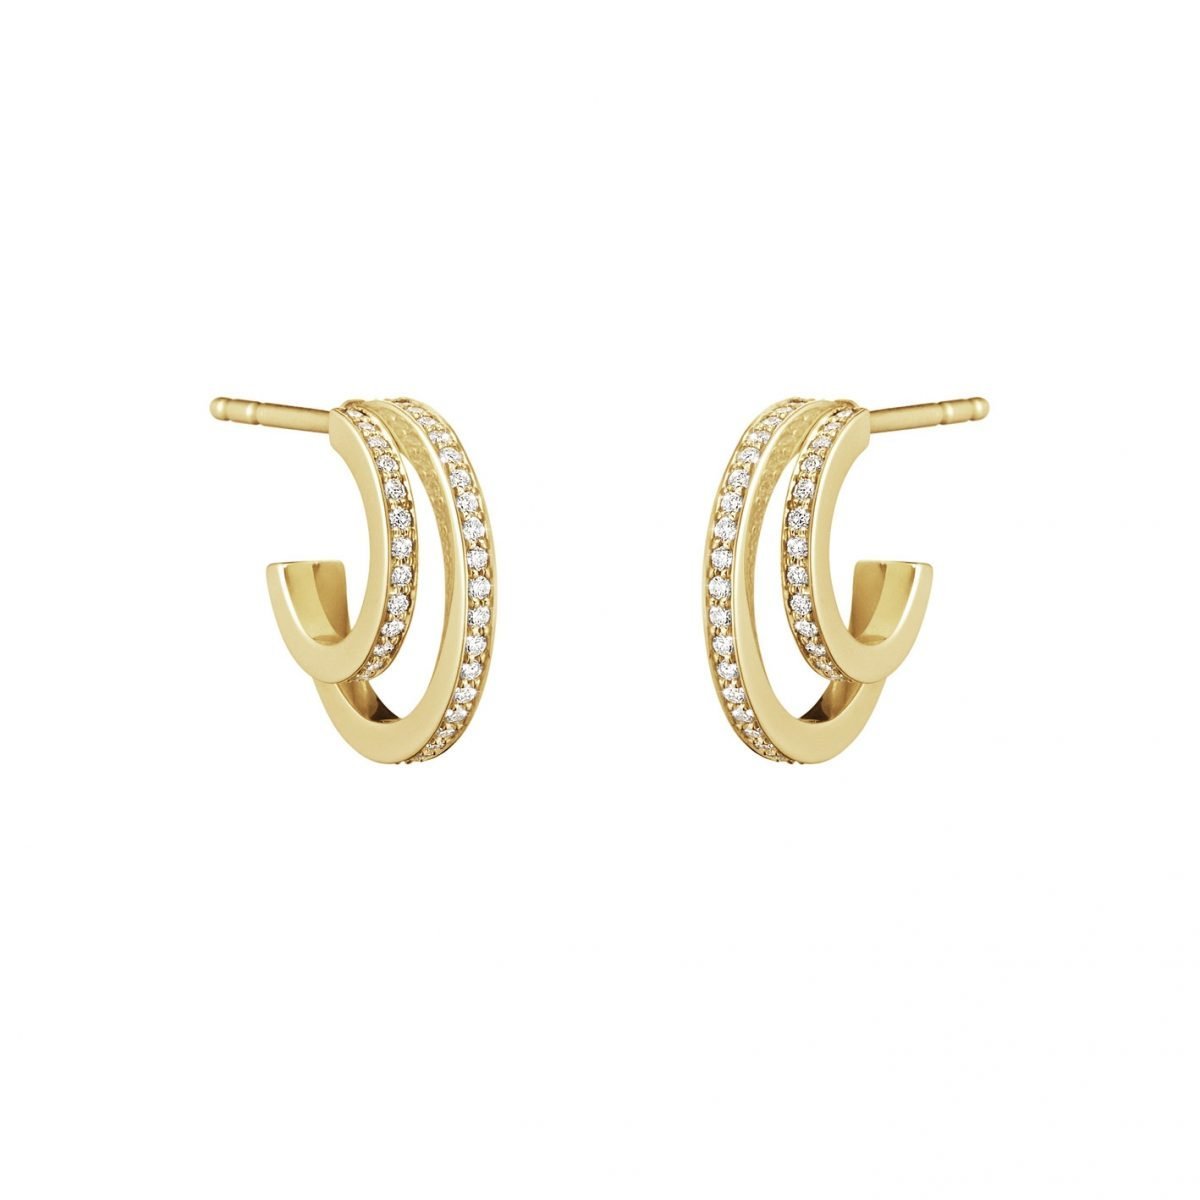 Halo 18ct Yellow Gold & Pave-Set Diamond Hoop Earrings